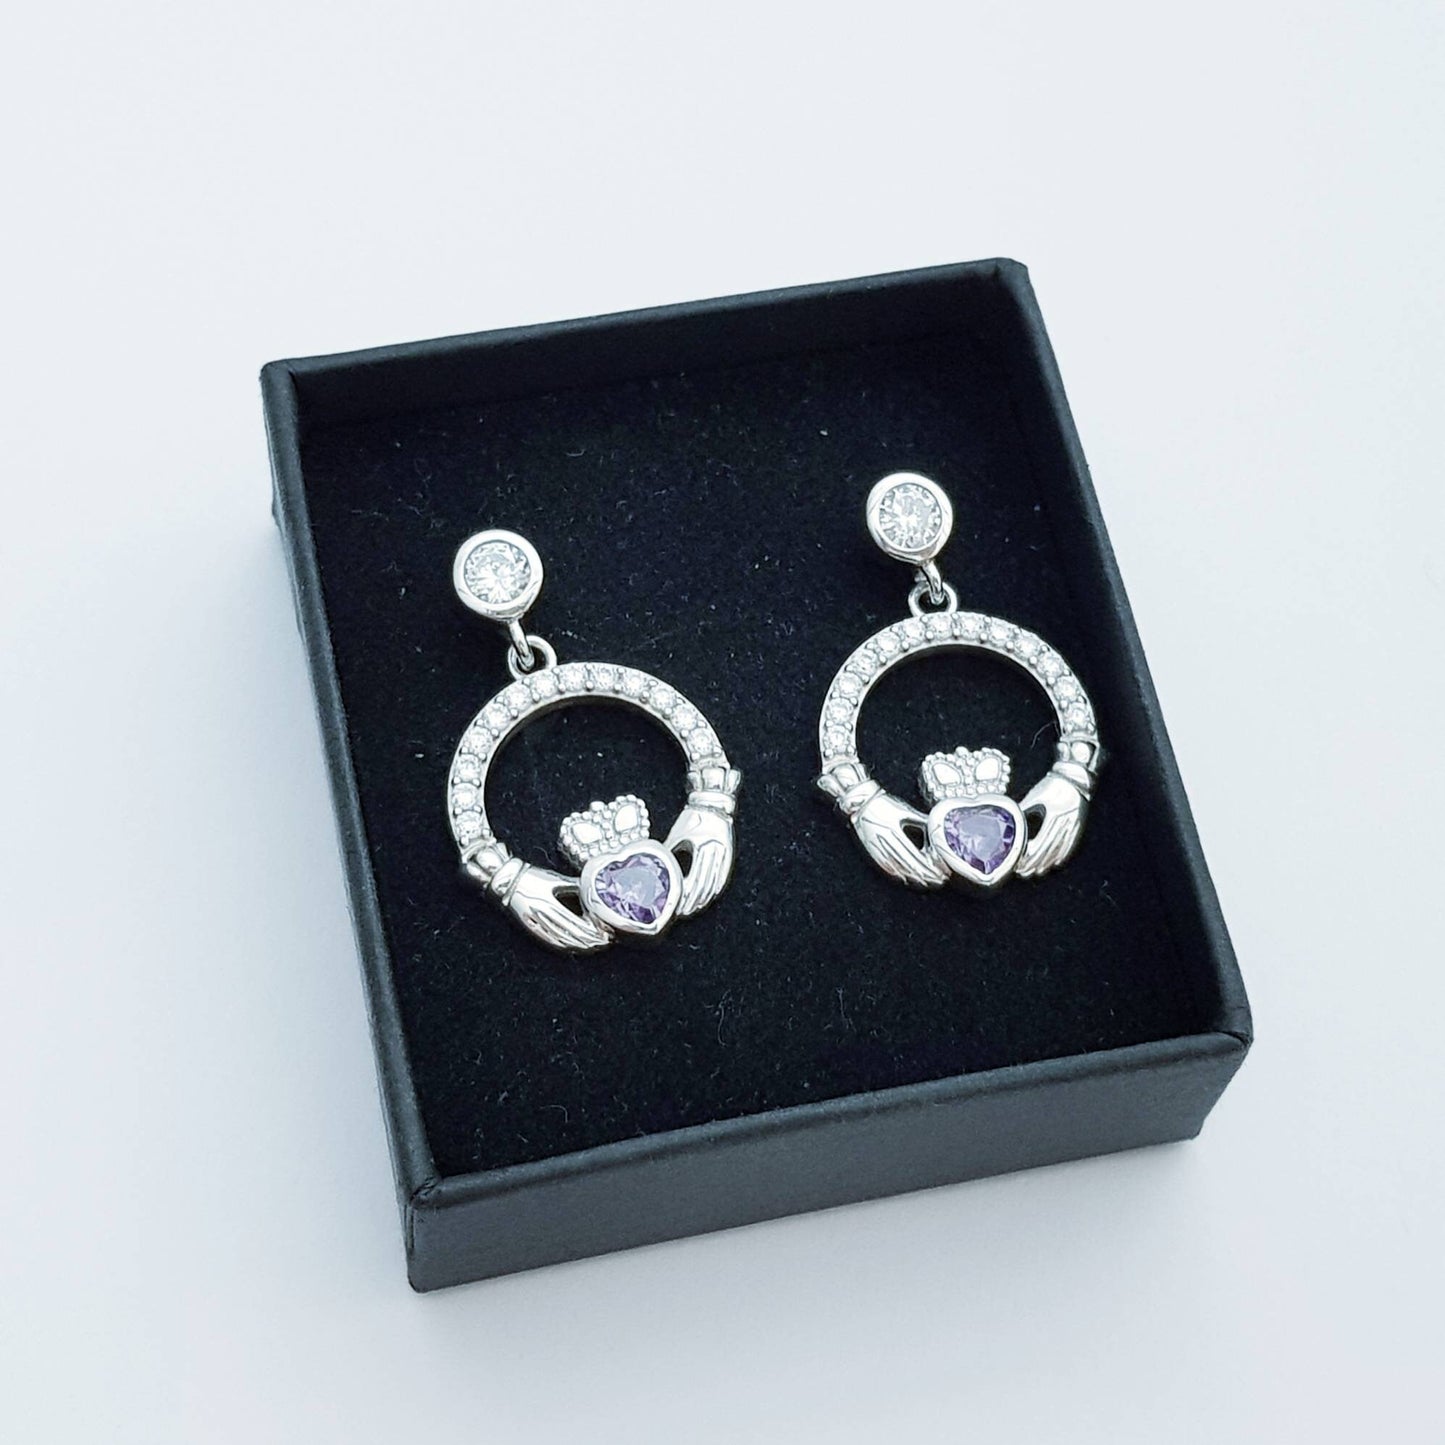 Claddagh drop earrings with purple stone heart, February  birthstone